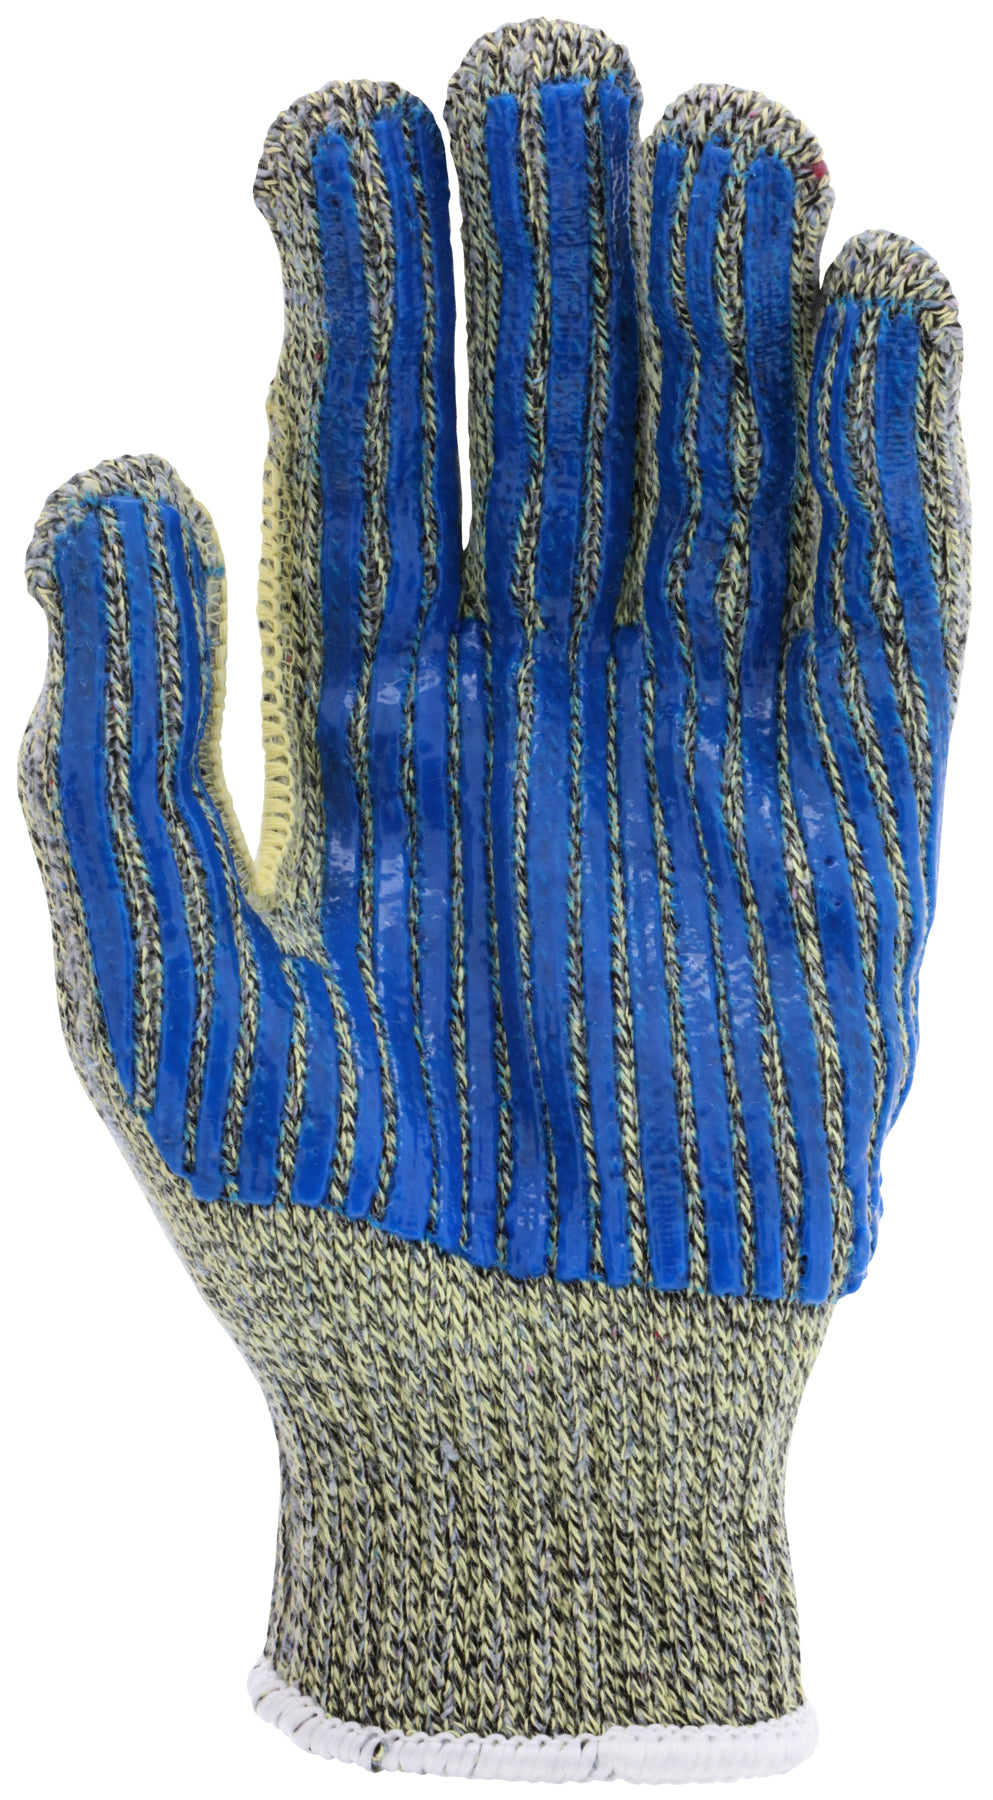 93868 - Cut Pro® Hero™ Work Gloves